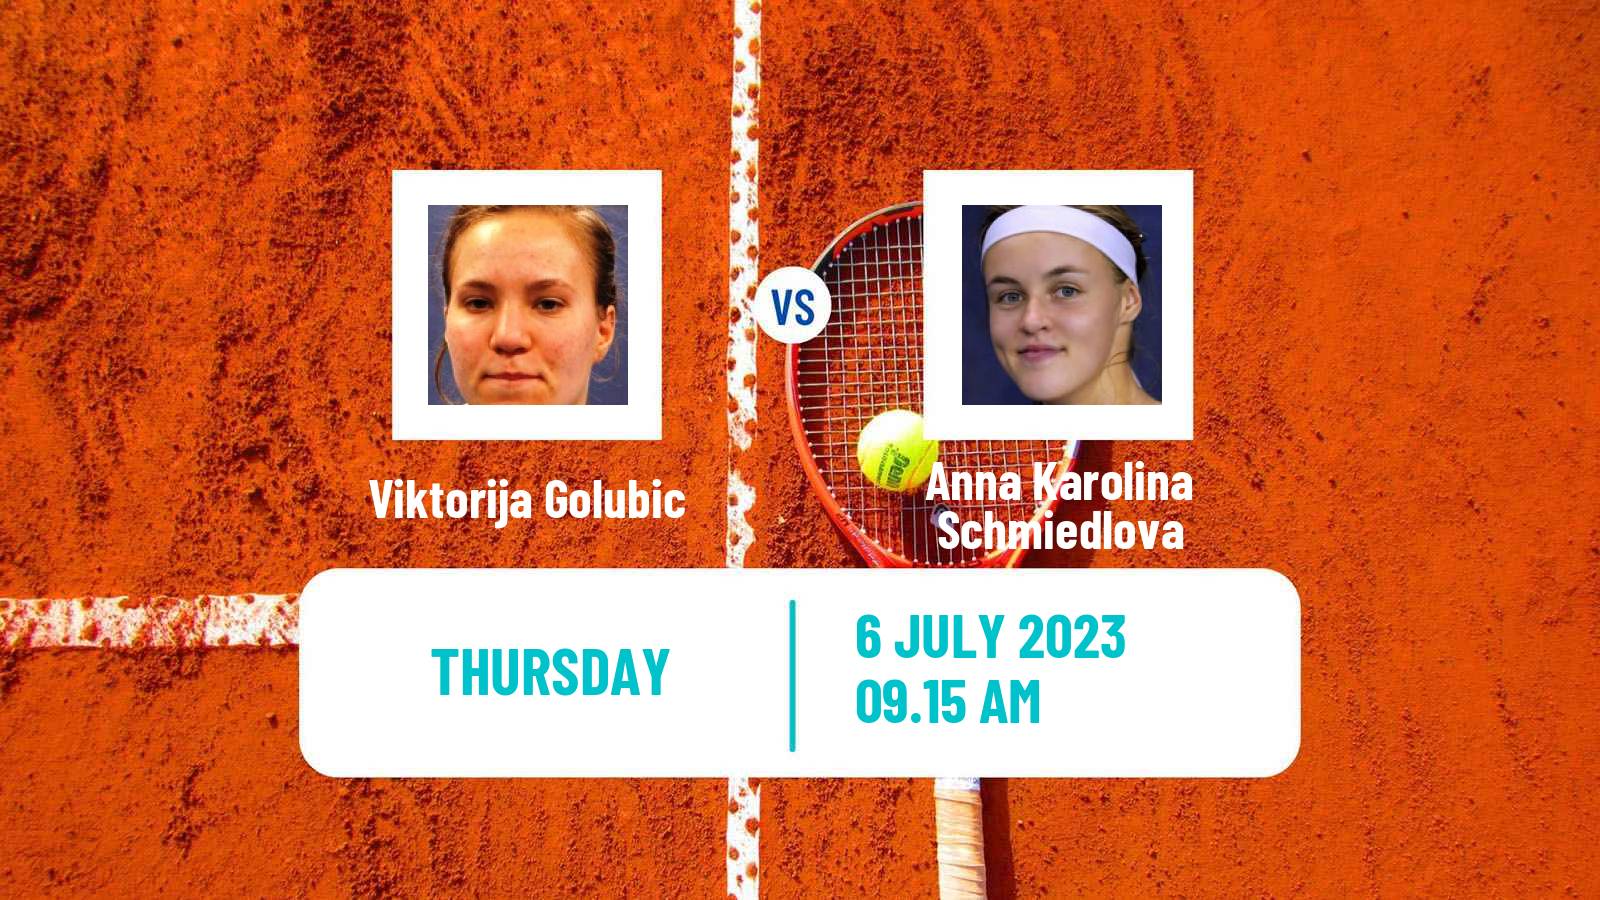 Tennis WTA Wimbledon Viktorija Golubic - Anna Karolina Schmiedlova